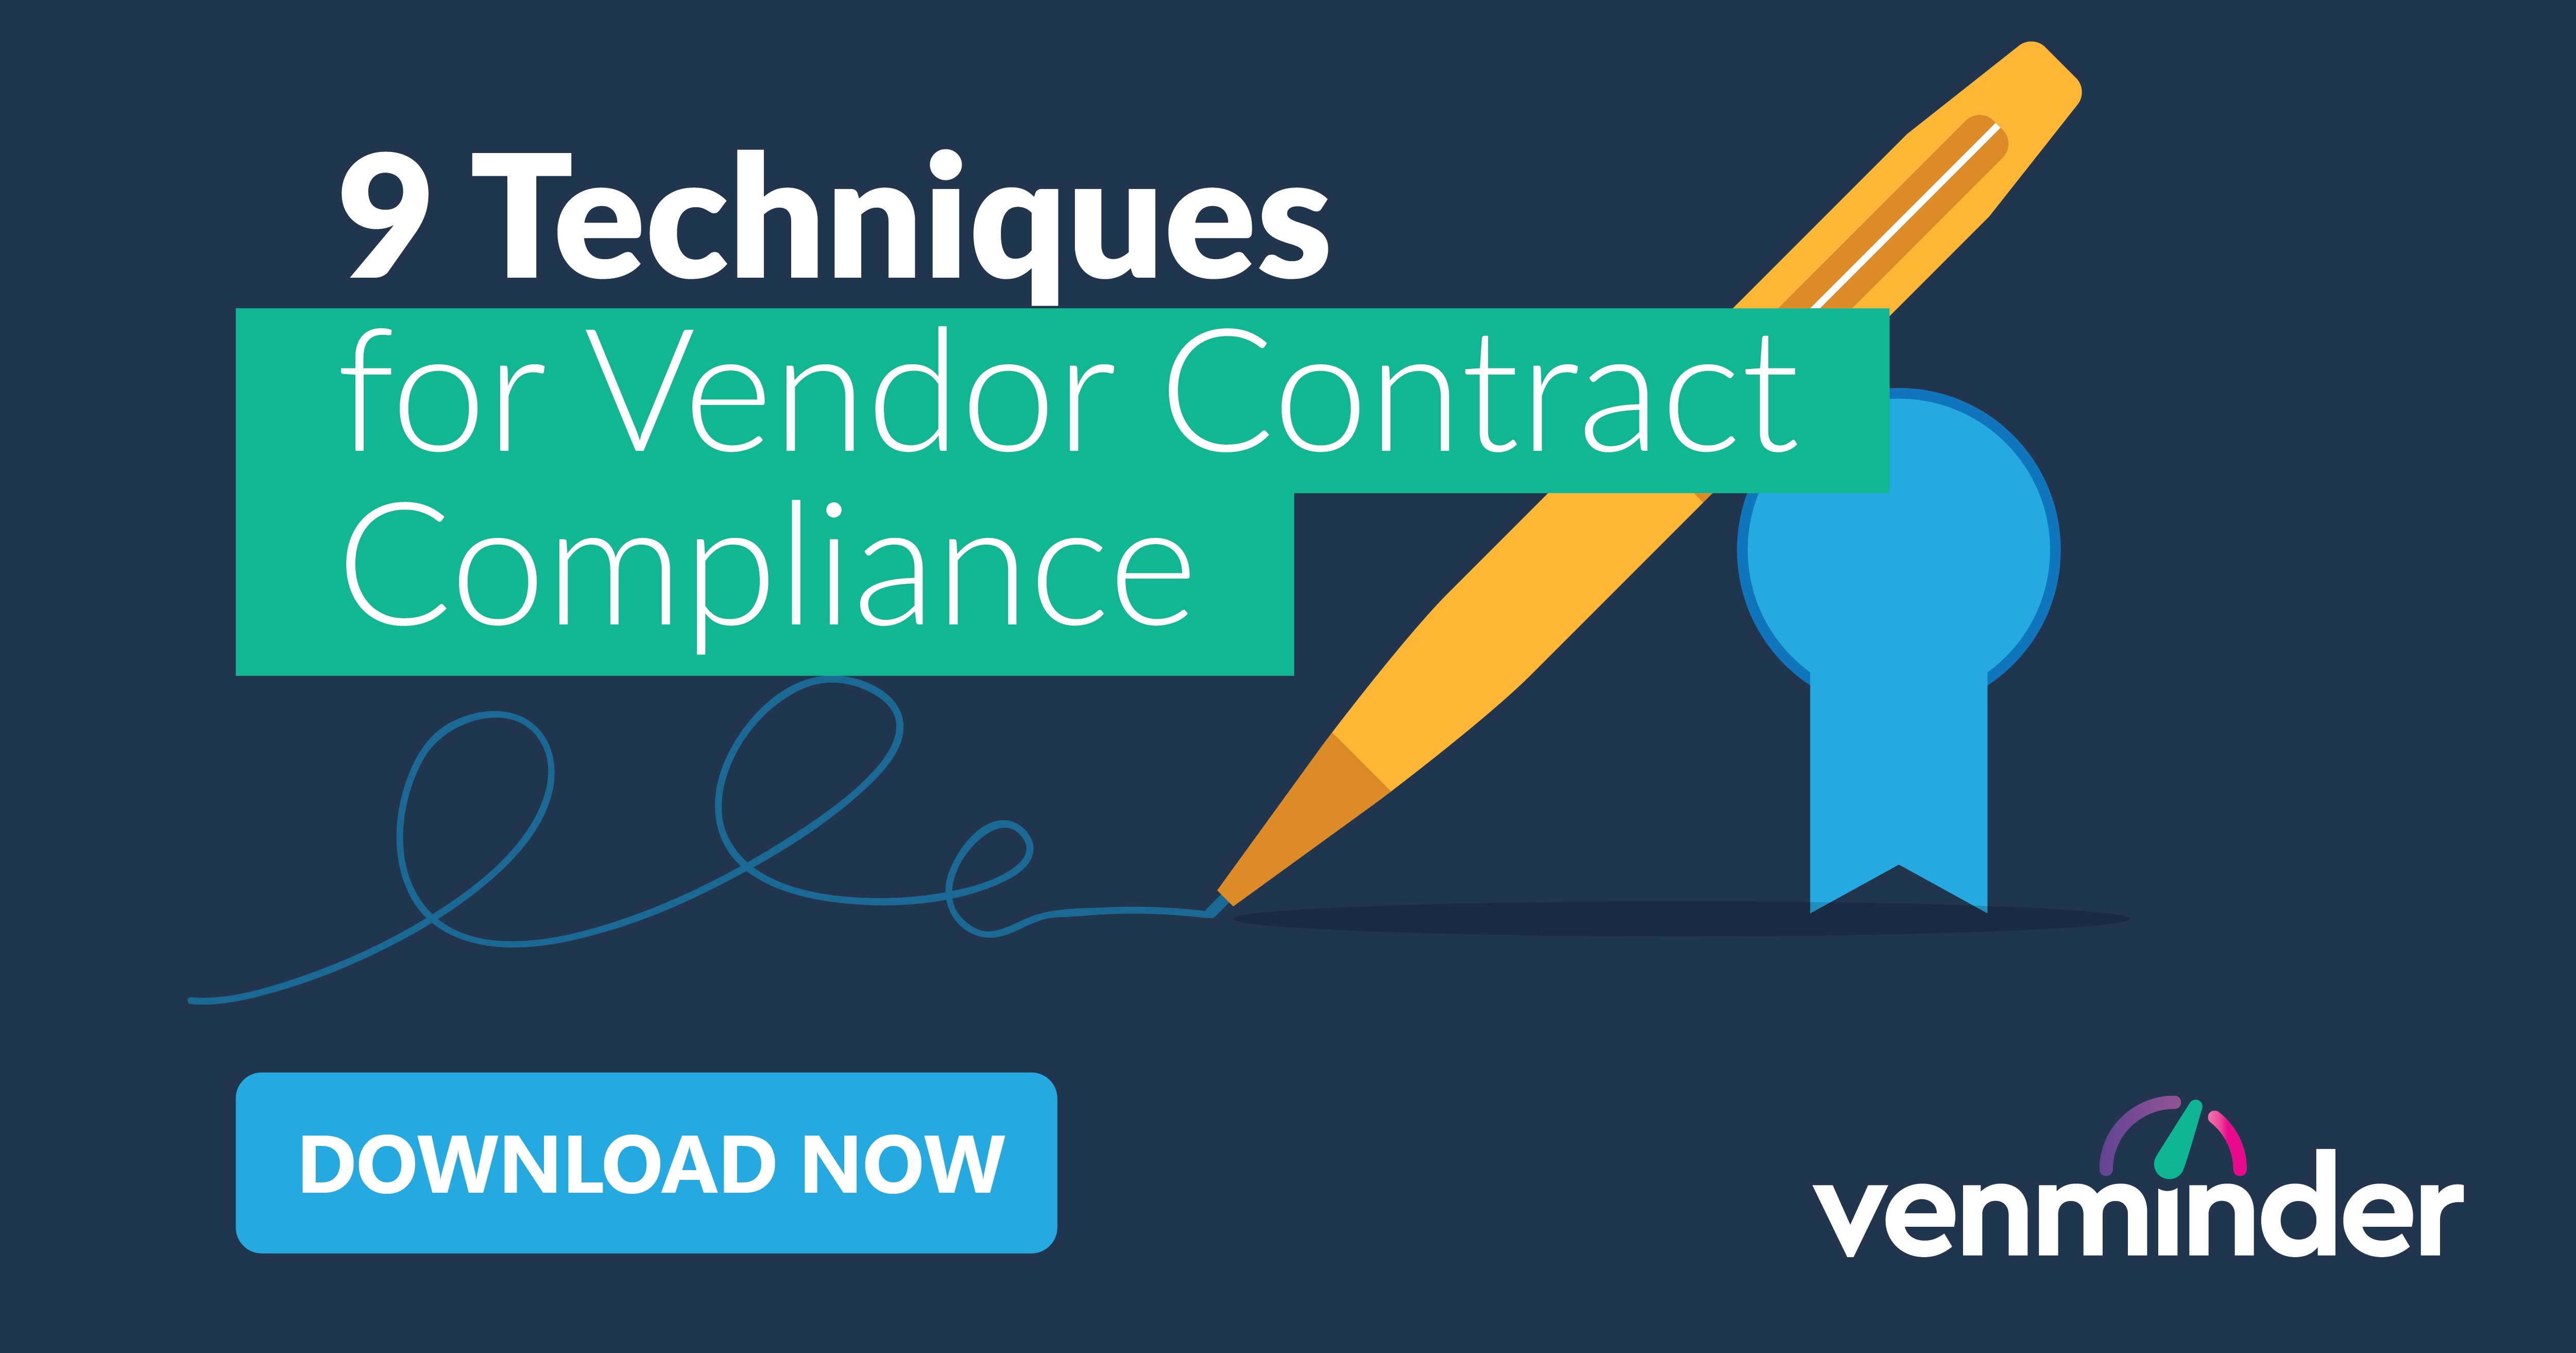 9 Techniques for Vendor Contract Compliance